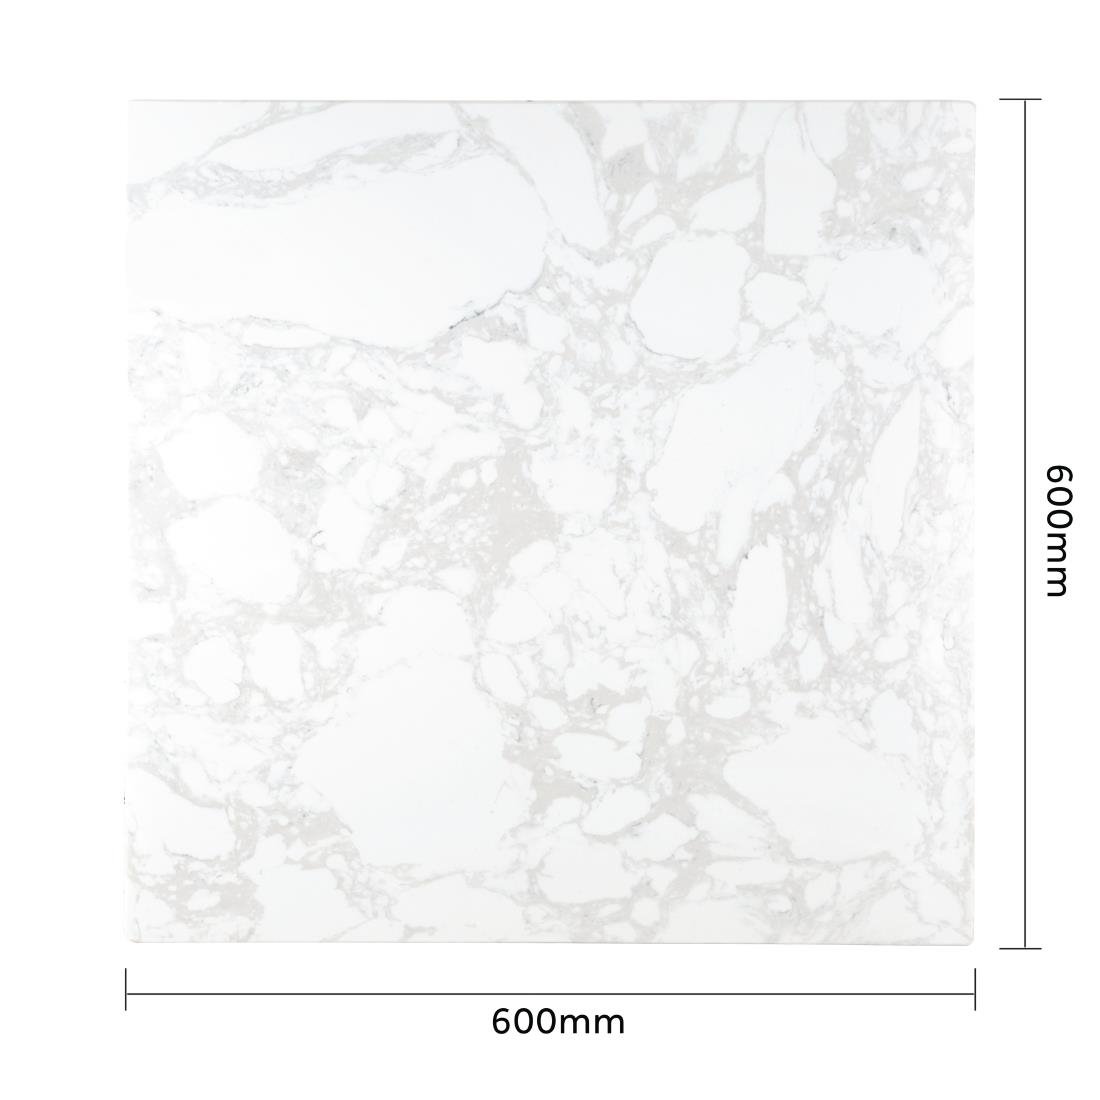 Bolero vierkant tafelblad met marmereffect, wit, 600 mm